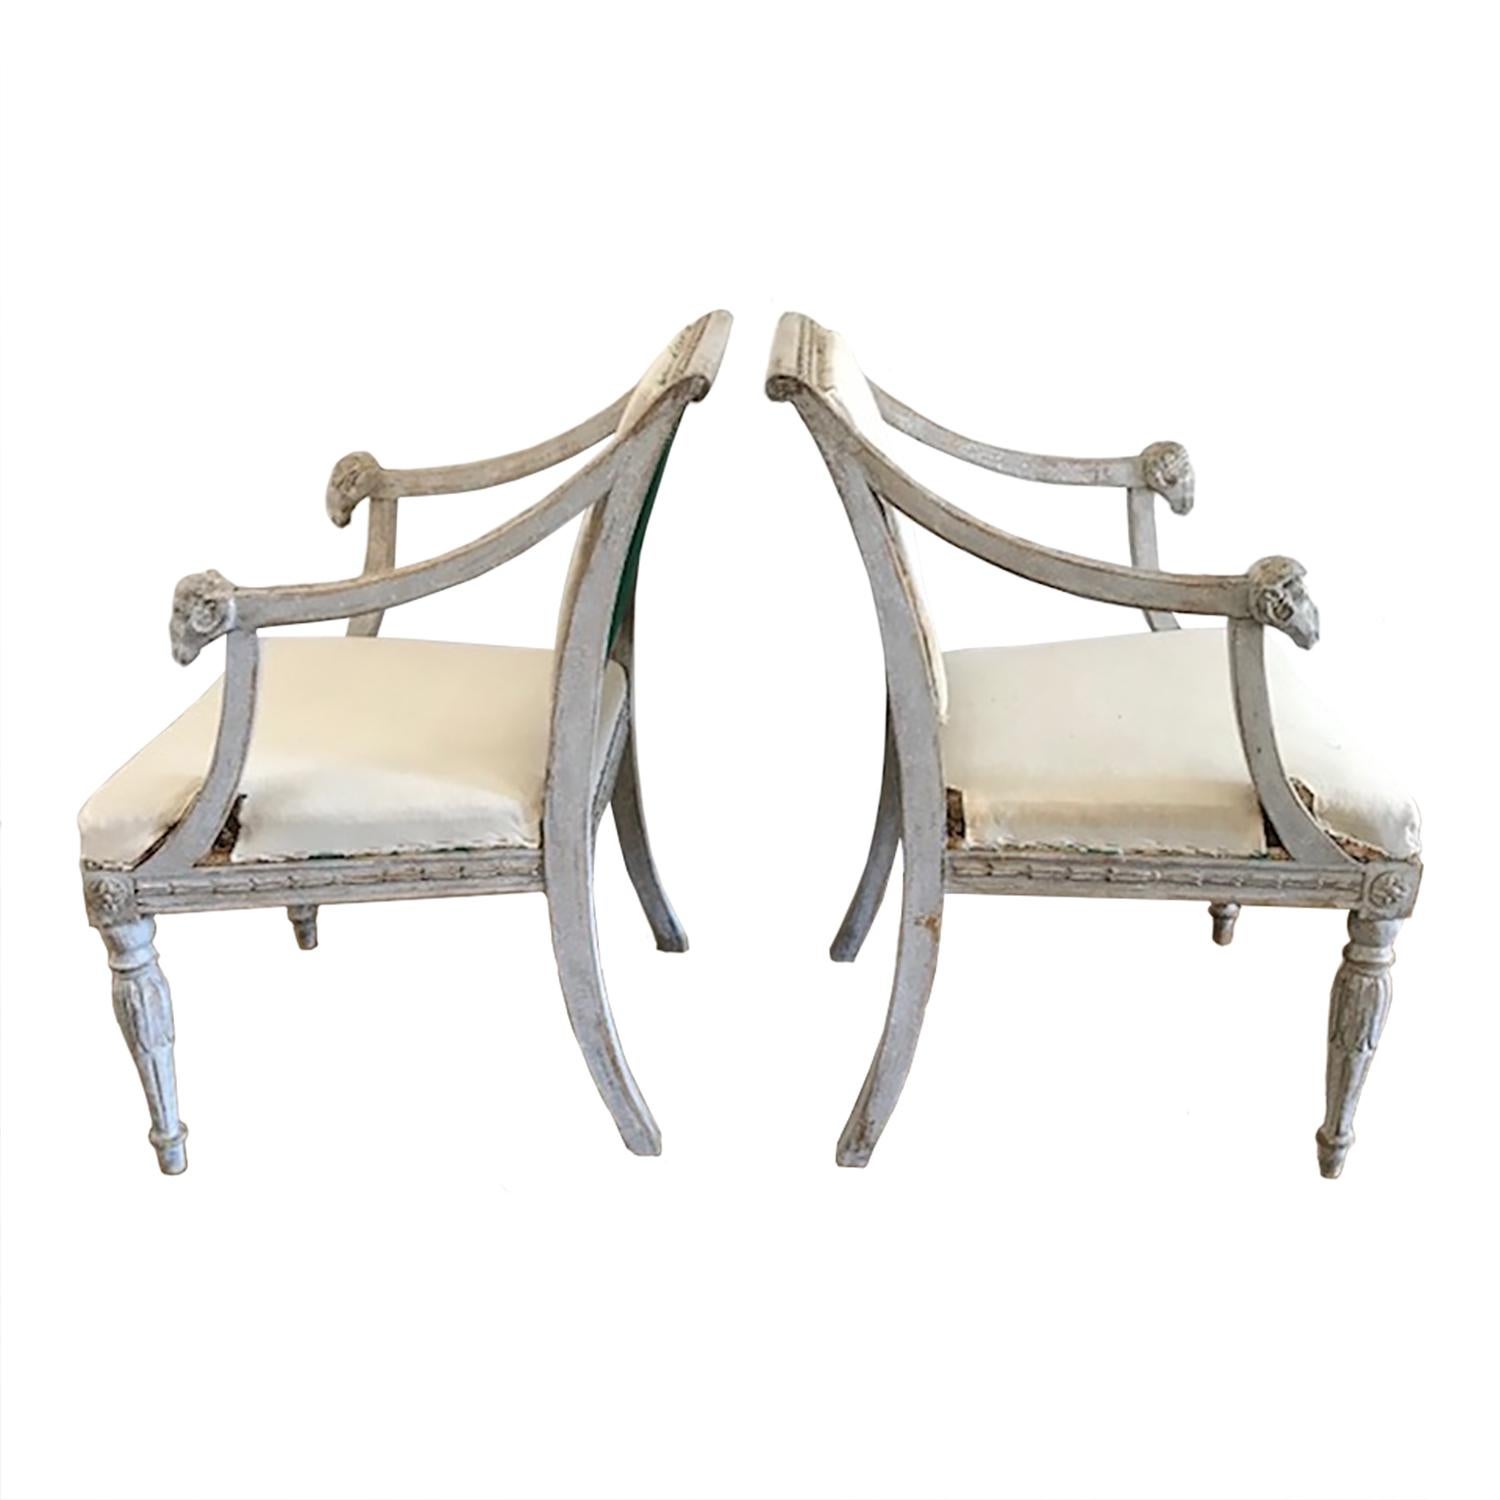 Pair of 19th Century Swedish Ram Head Chairs (Schwedisch)